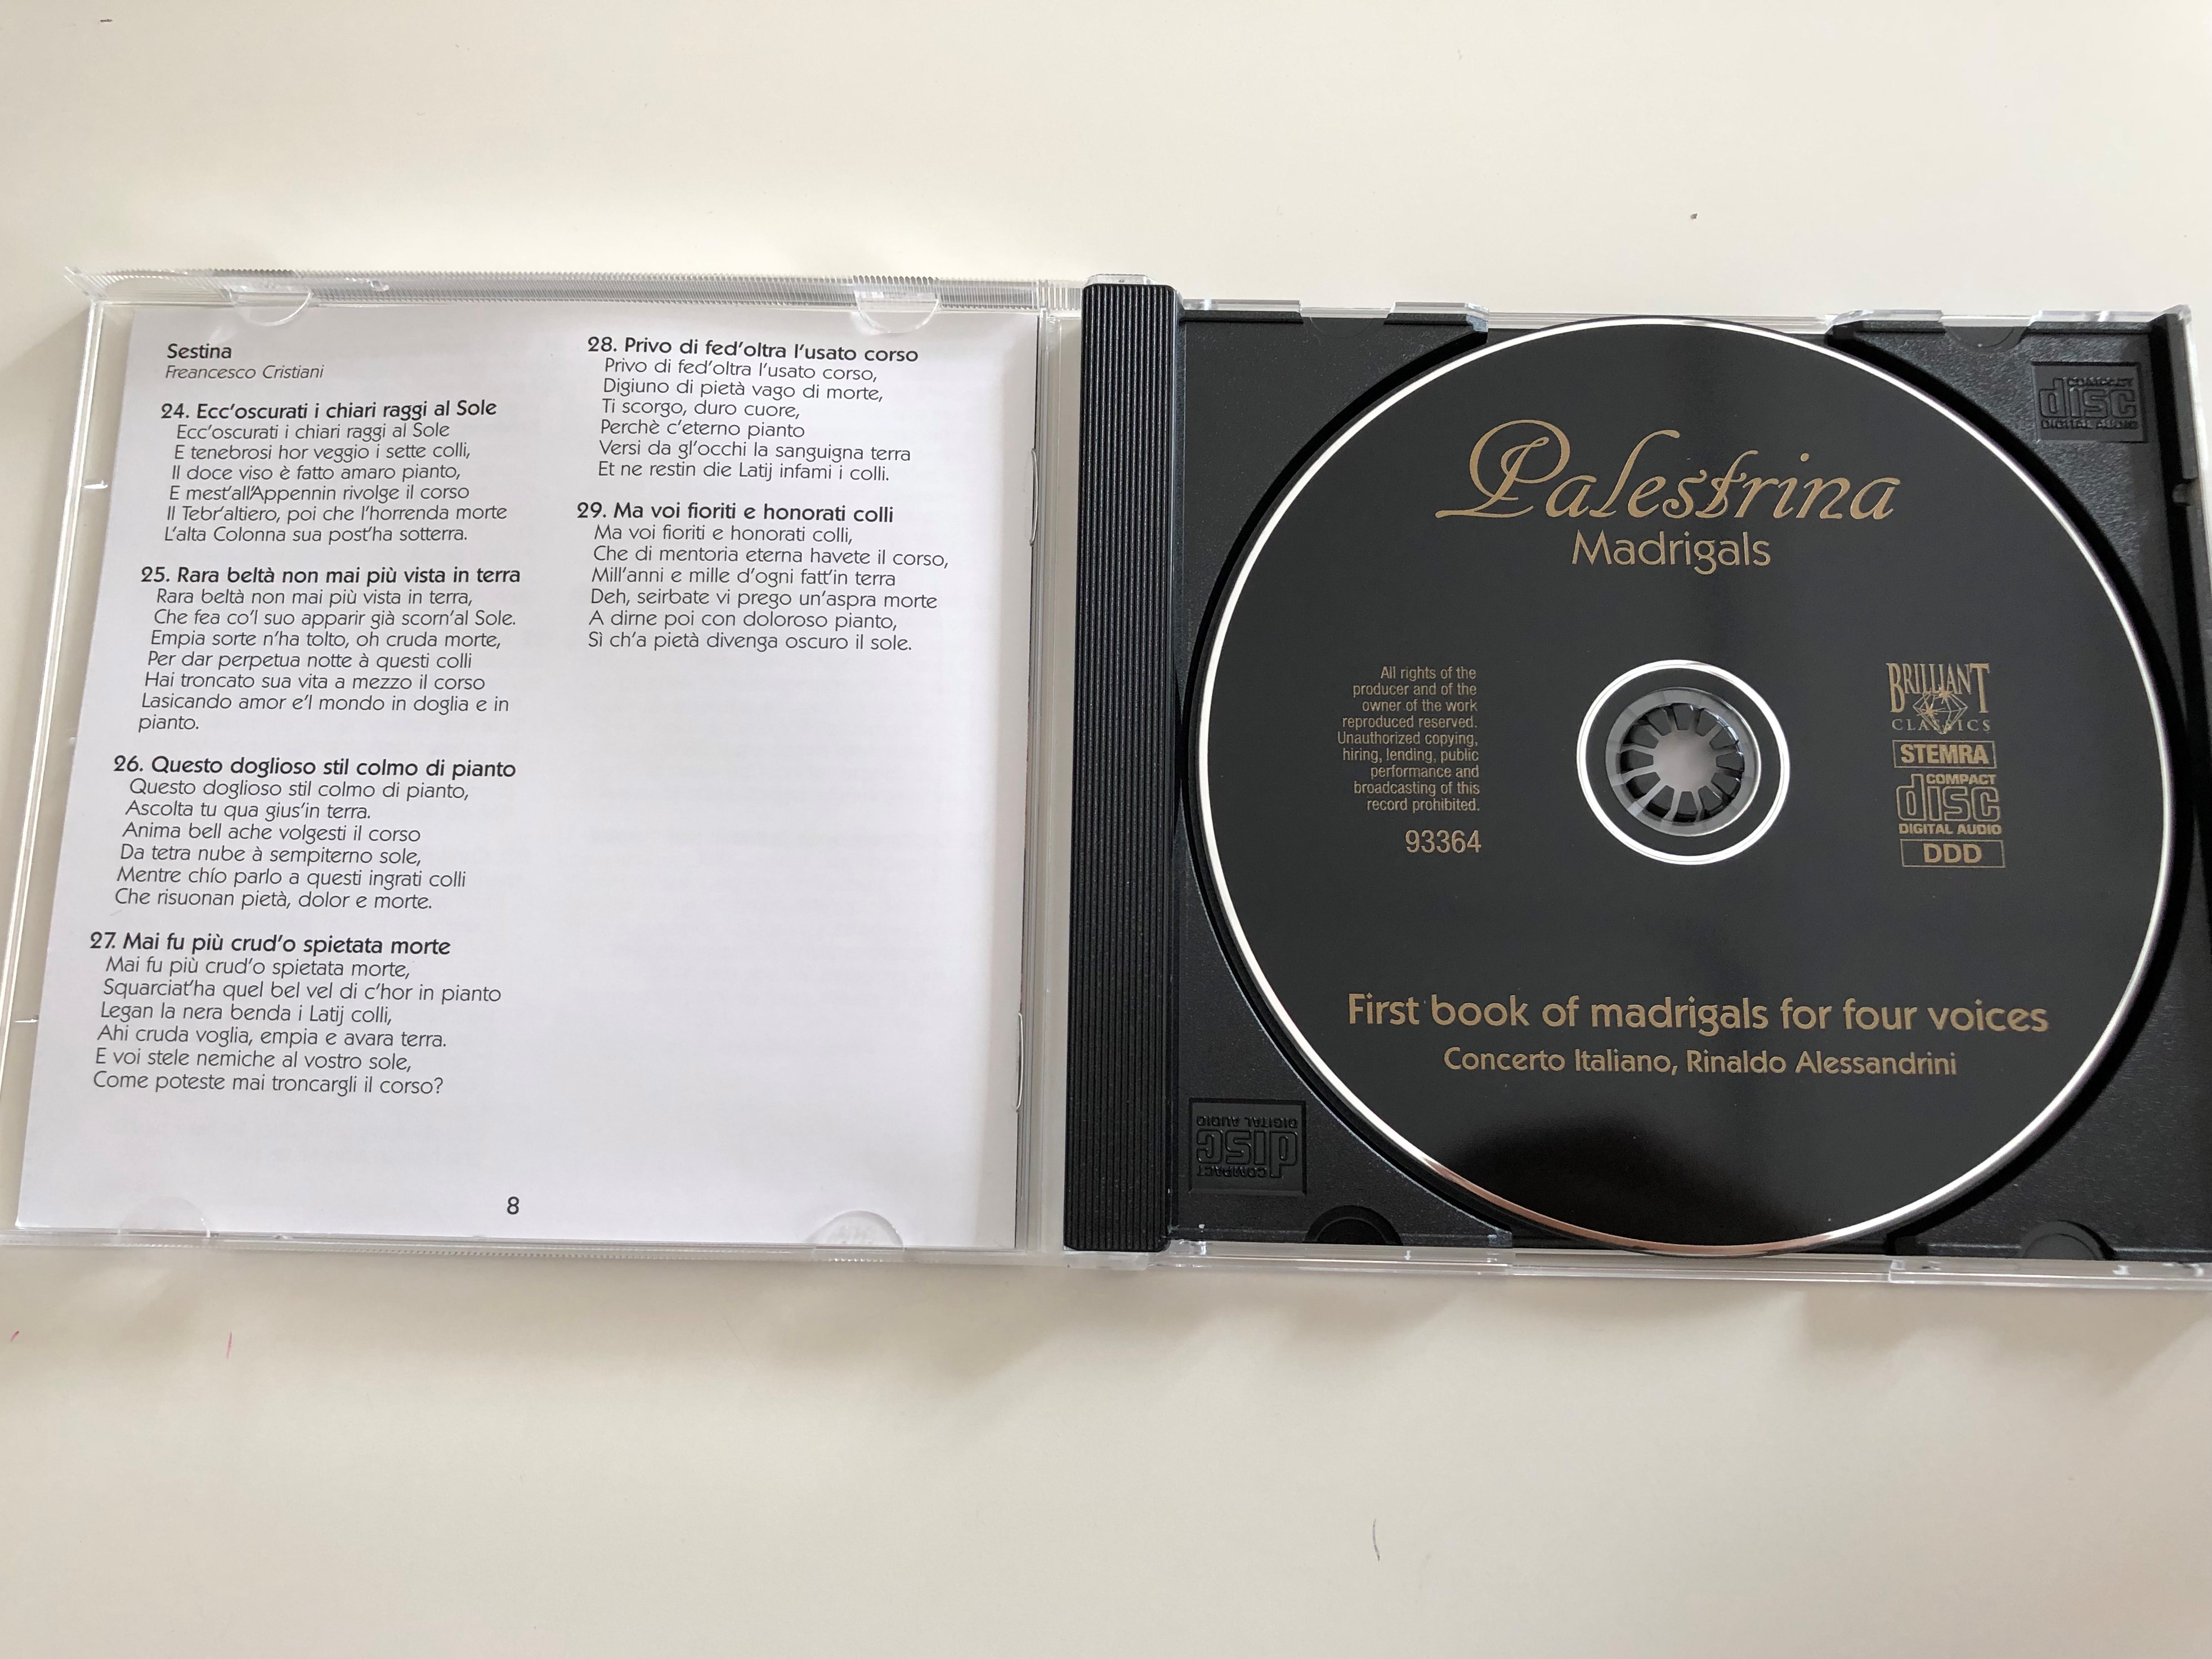 giovanni-palestrina-madrigals-first-book-of-madrigals-for-four-voices-concerto-italiano-cond.-rinaldo-alessandrini-93364-audio-cd-1994-5-.jpg